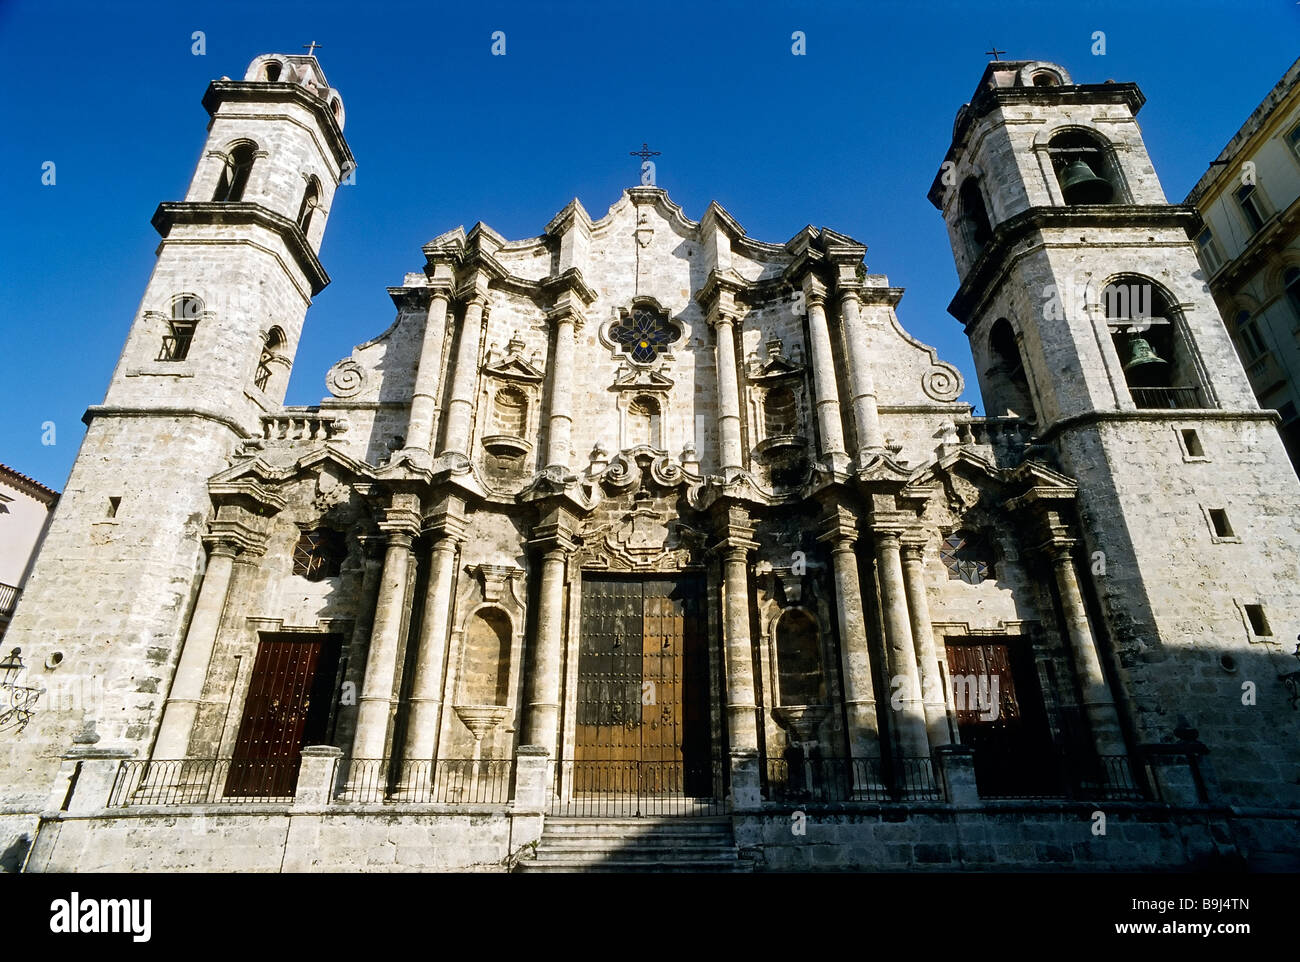 Cathédrale, Catedral de San Cristóbal de La Habana, façade baroque, La Havane, Cuba, Caraïbes Banque D'Images